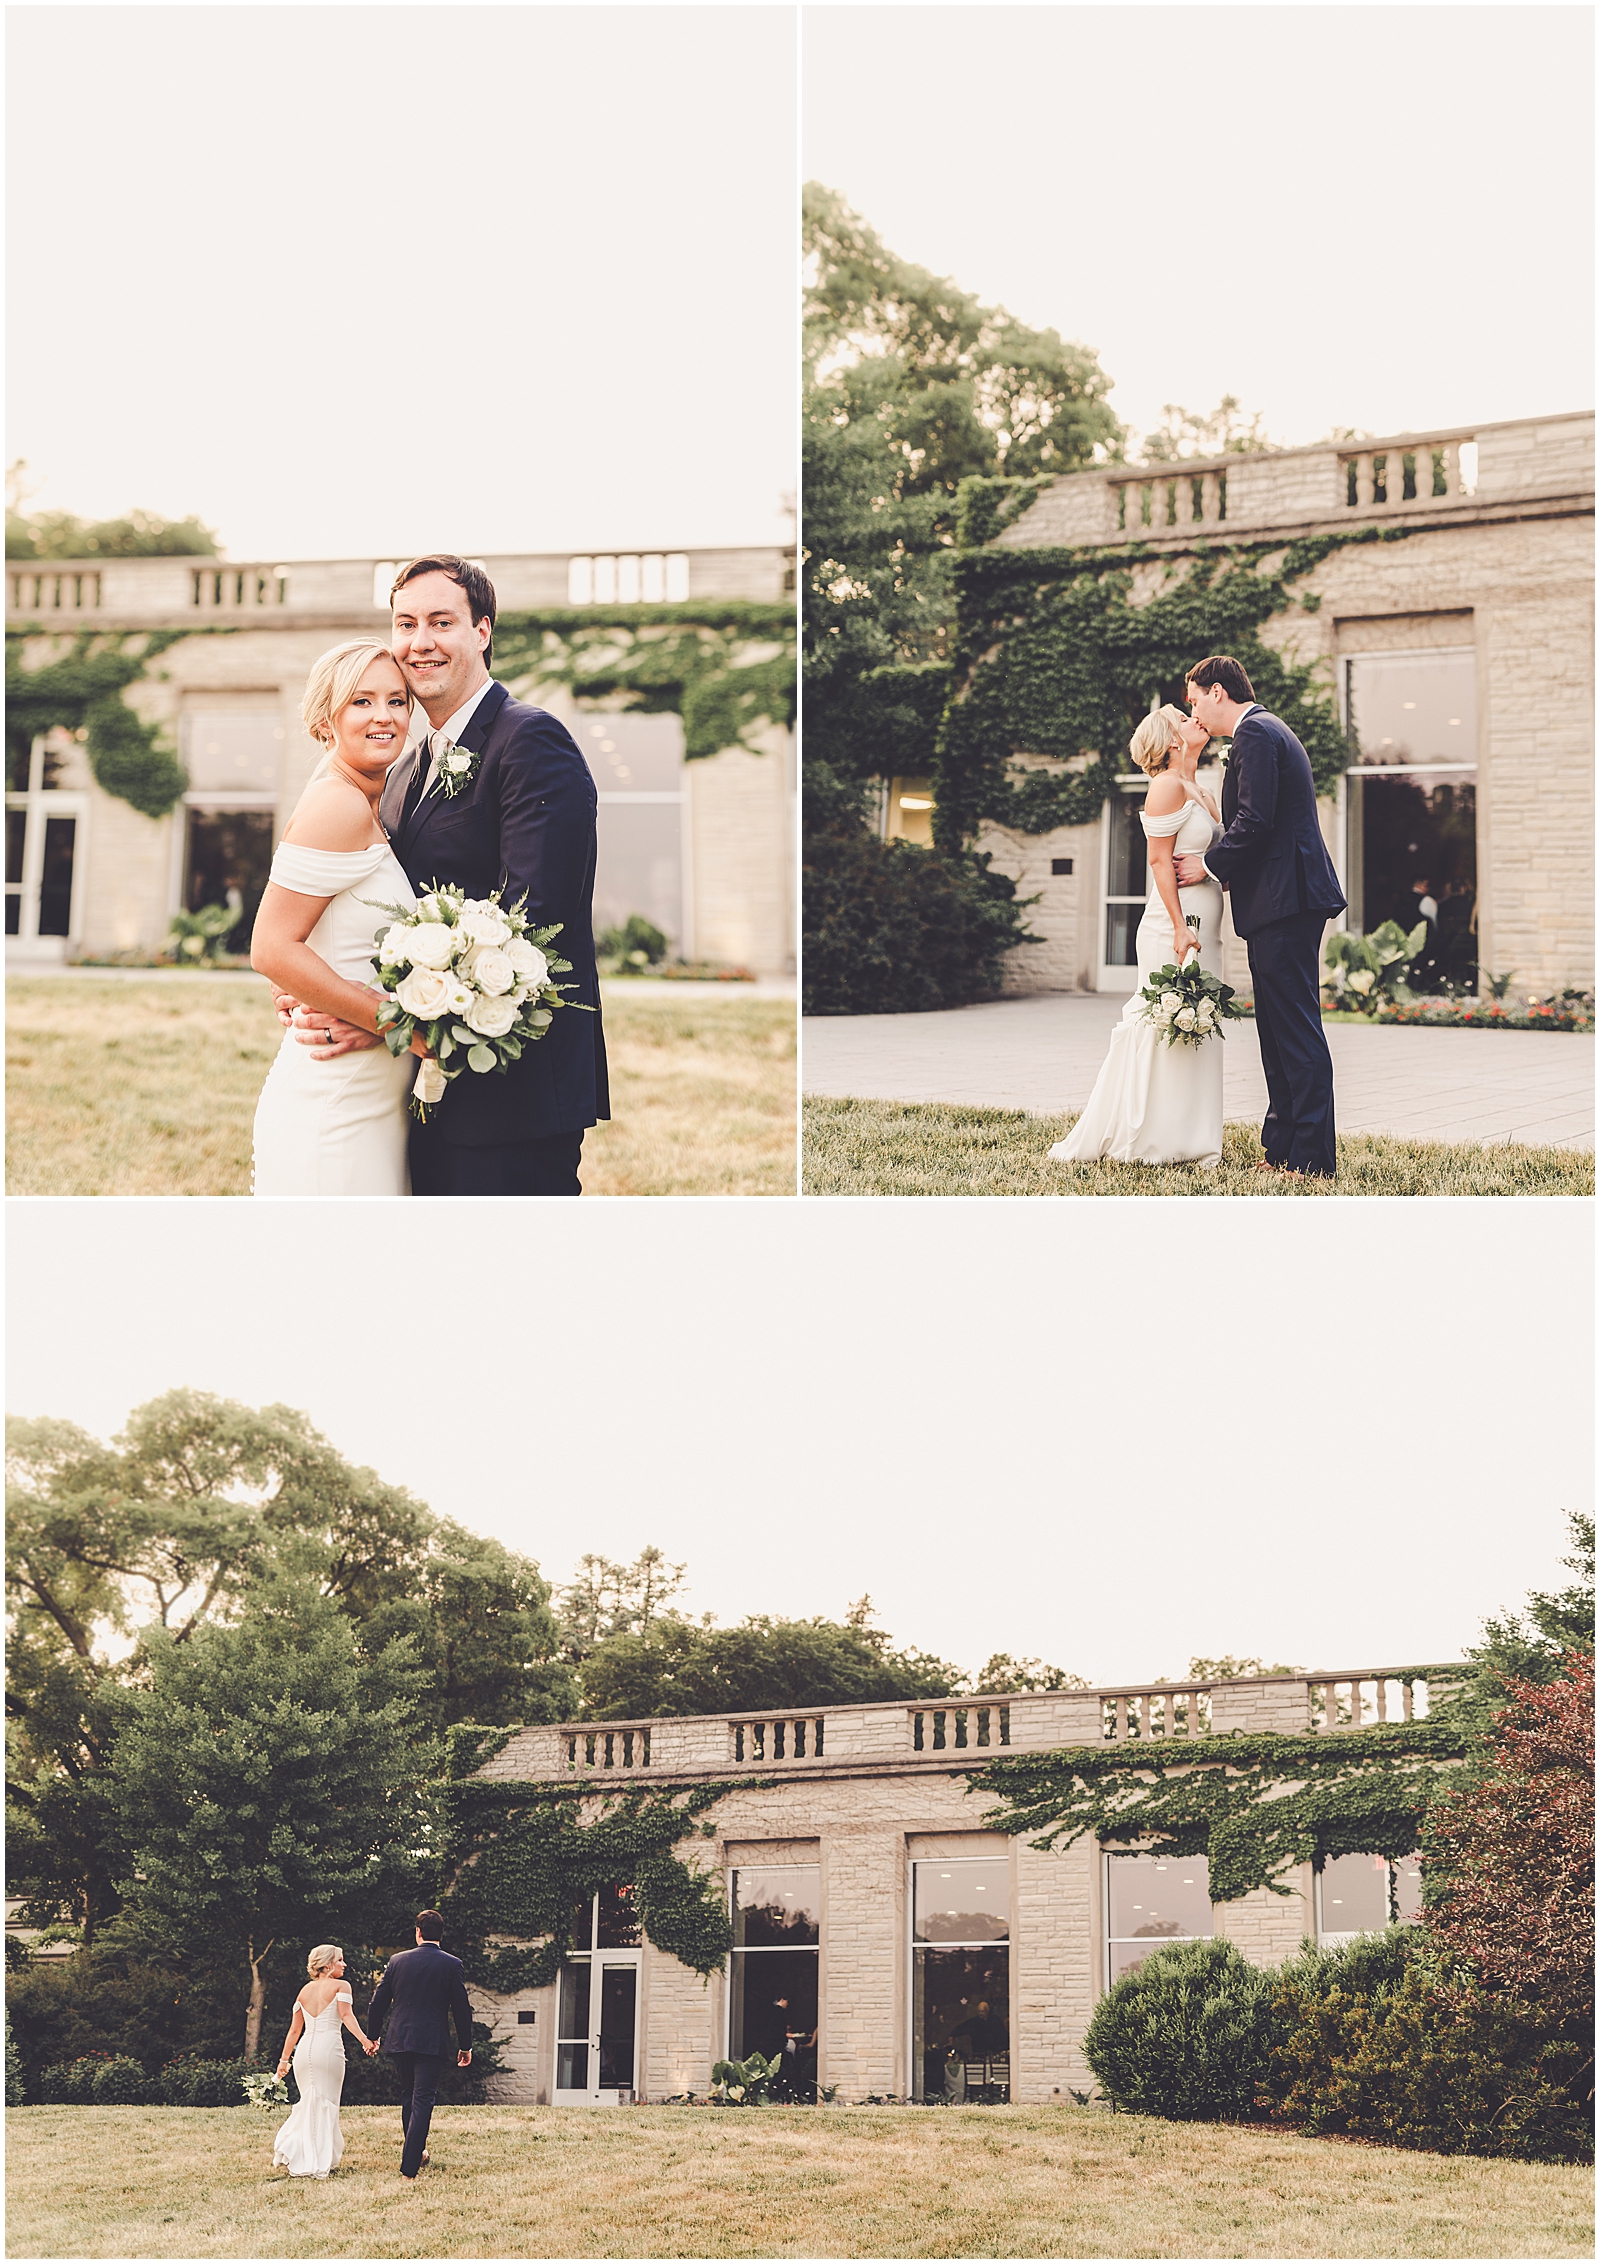 Tracy and Dan's summer Morton Arboretum wedding day with Chicagoland wedding photographer Kara Evans Photographer.